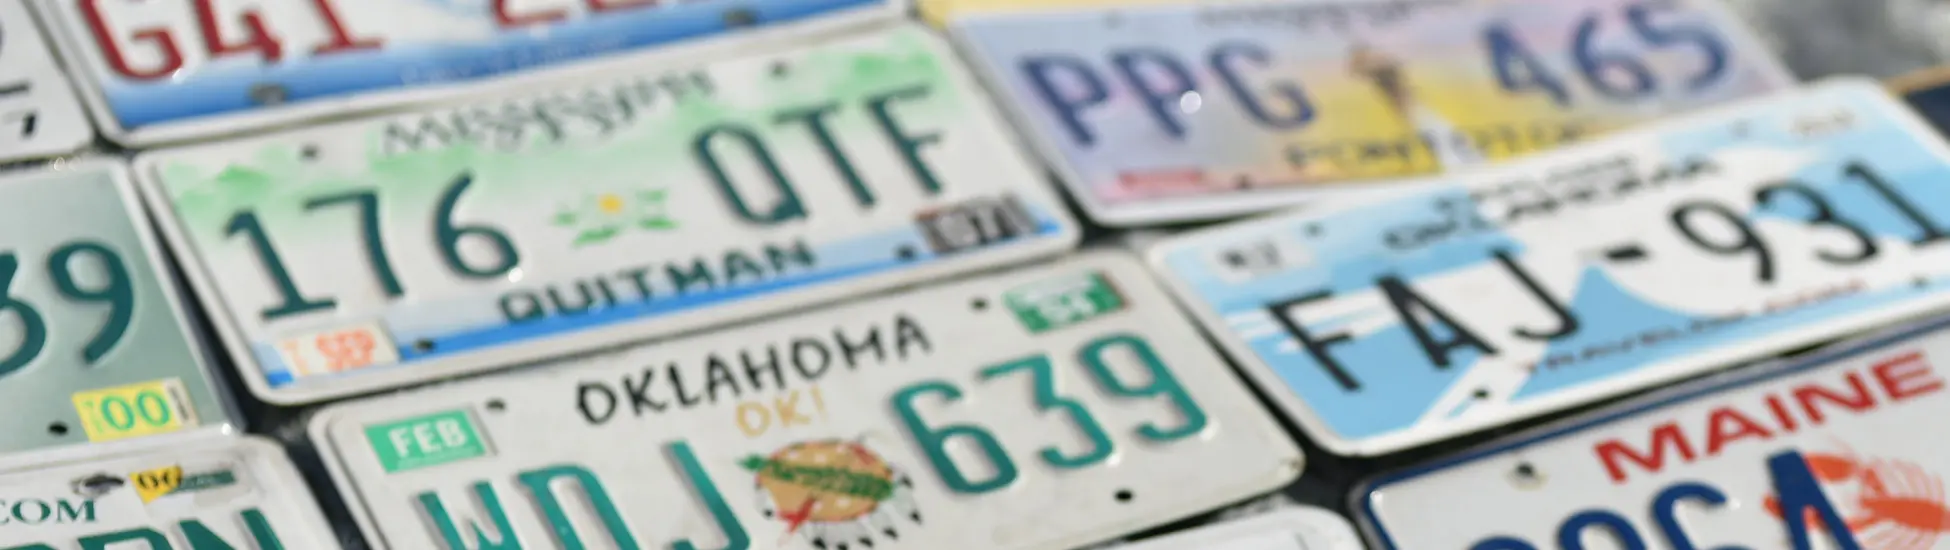 License Plates Background Image